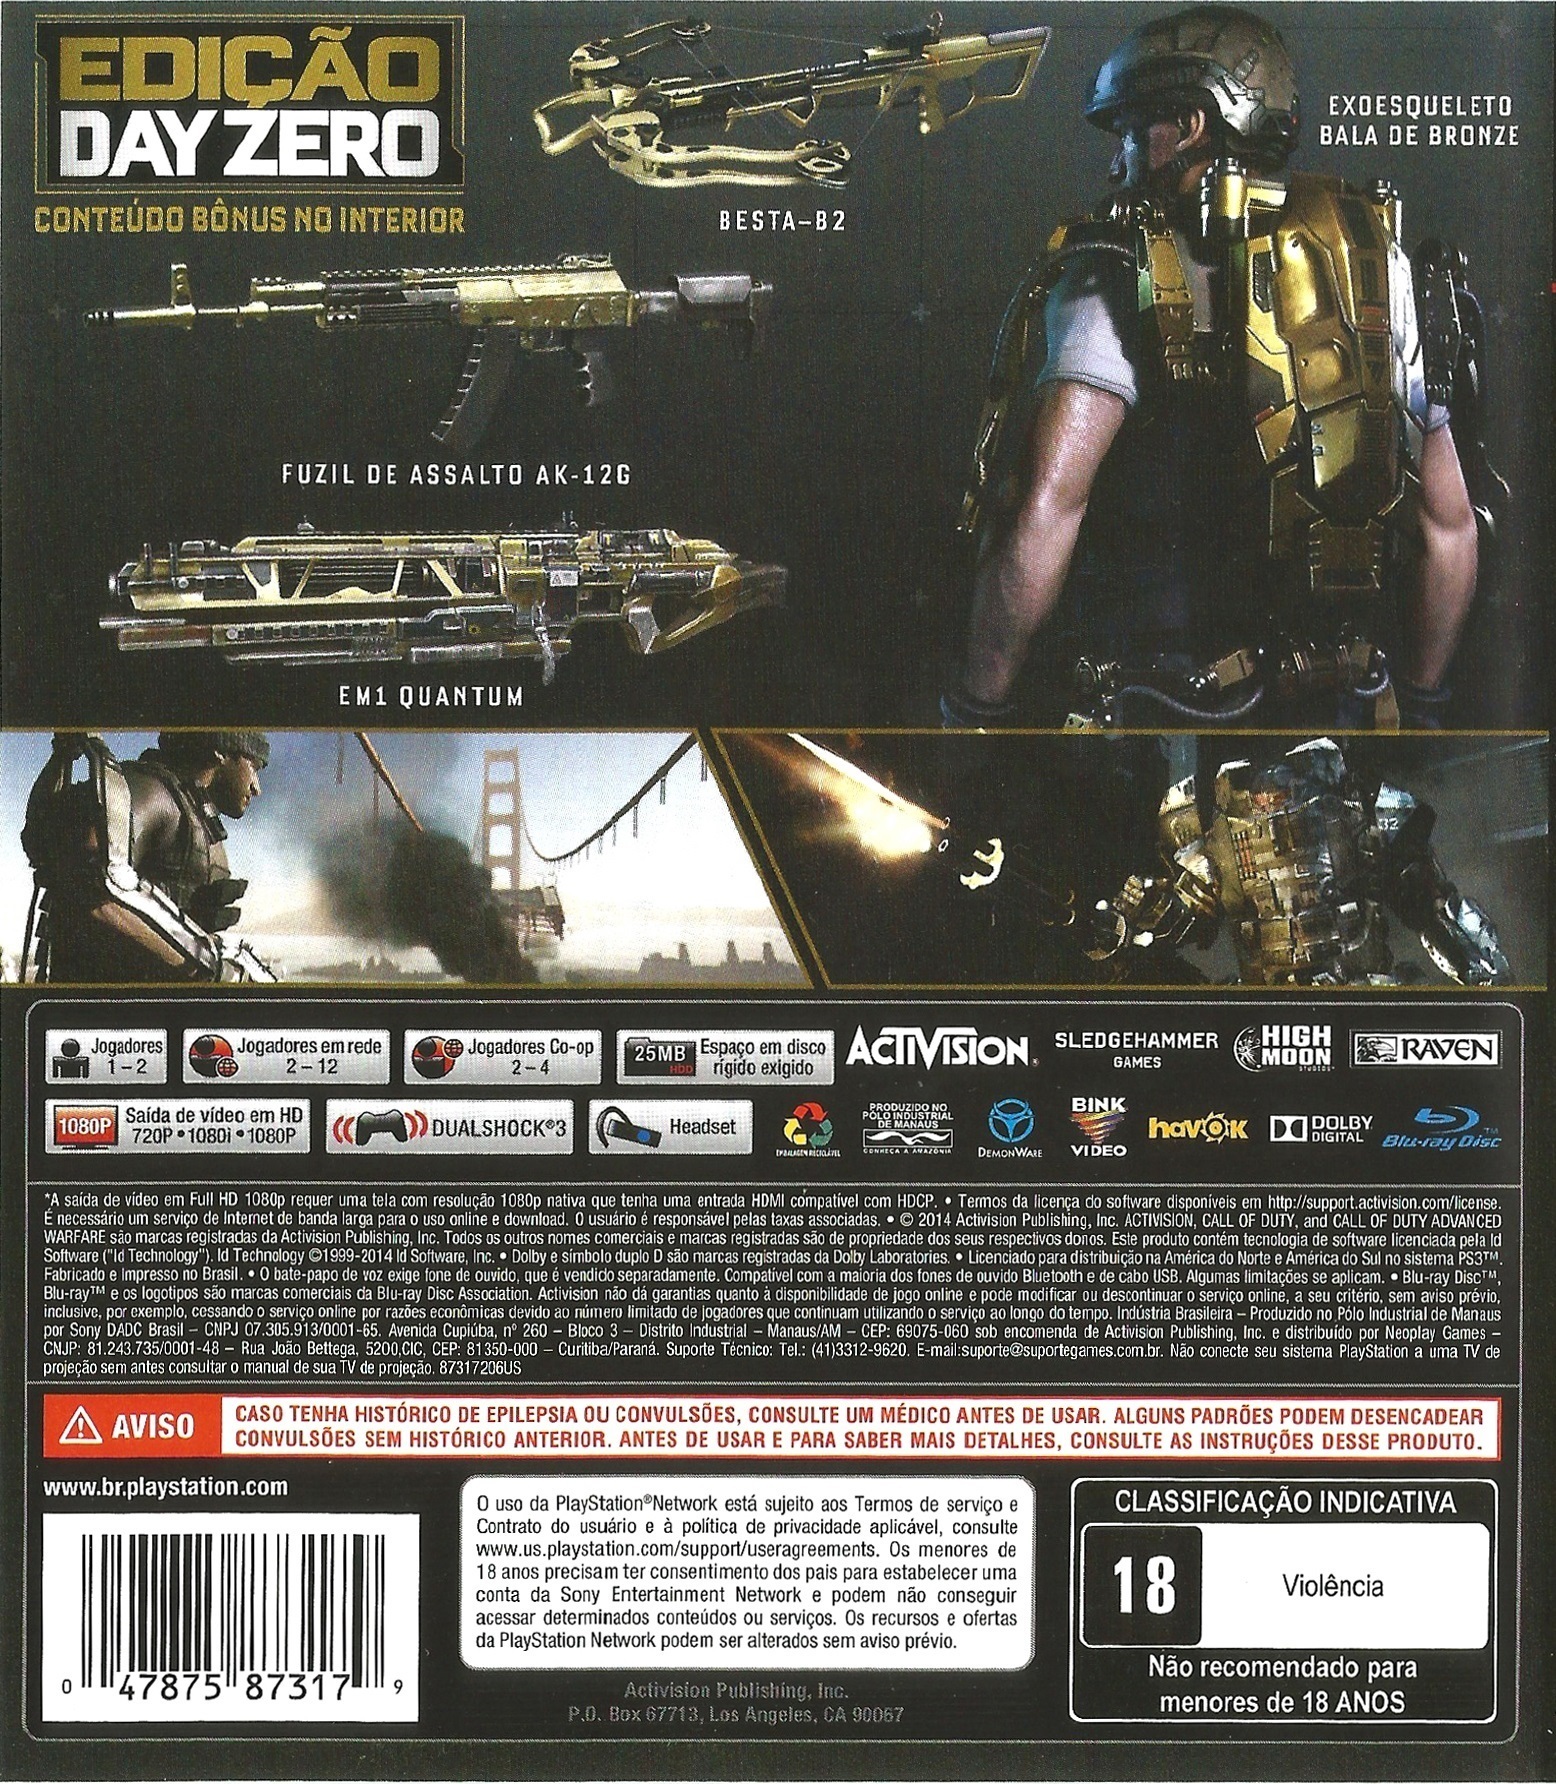 Call of Duty: Advanced Warfare - Ascendance Box Shot for Xbox 360